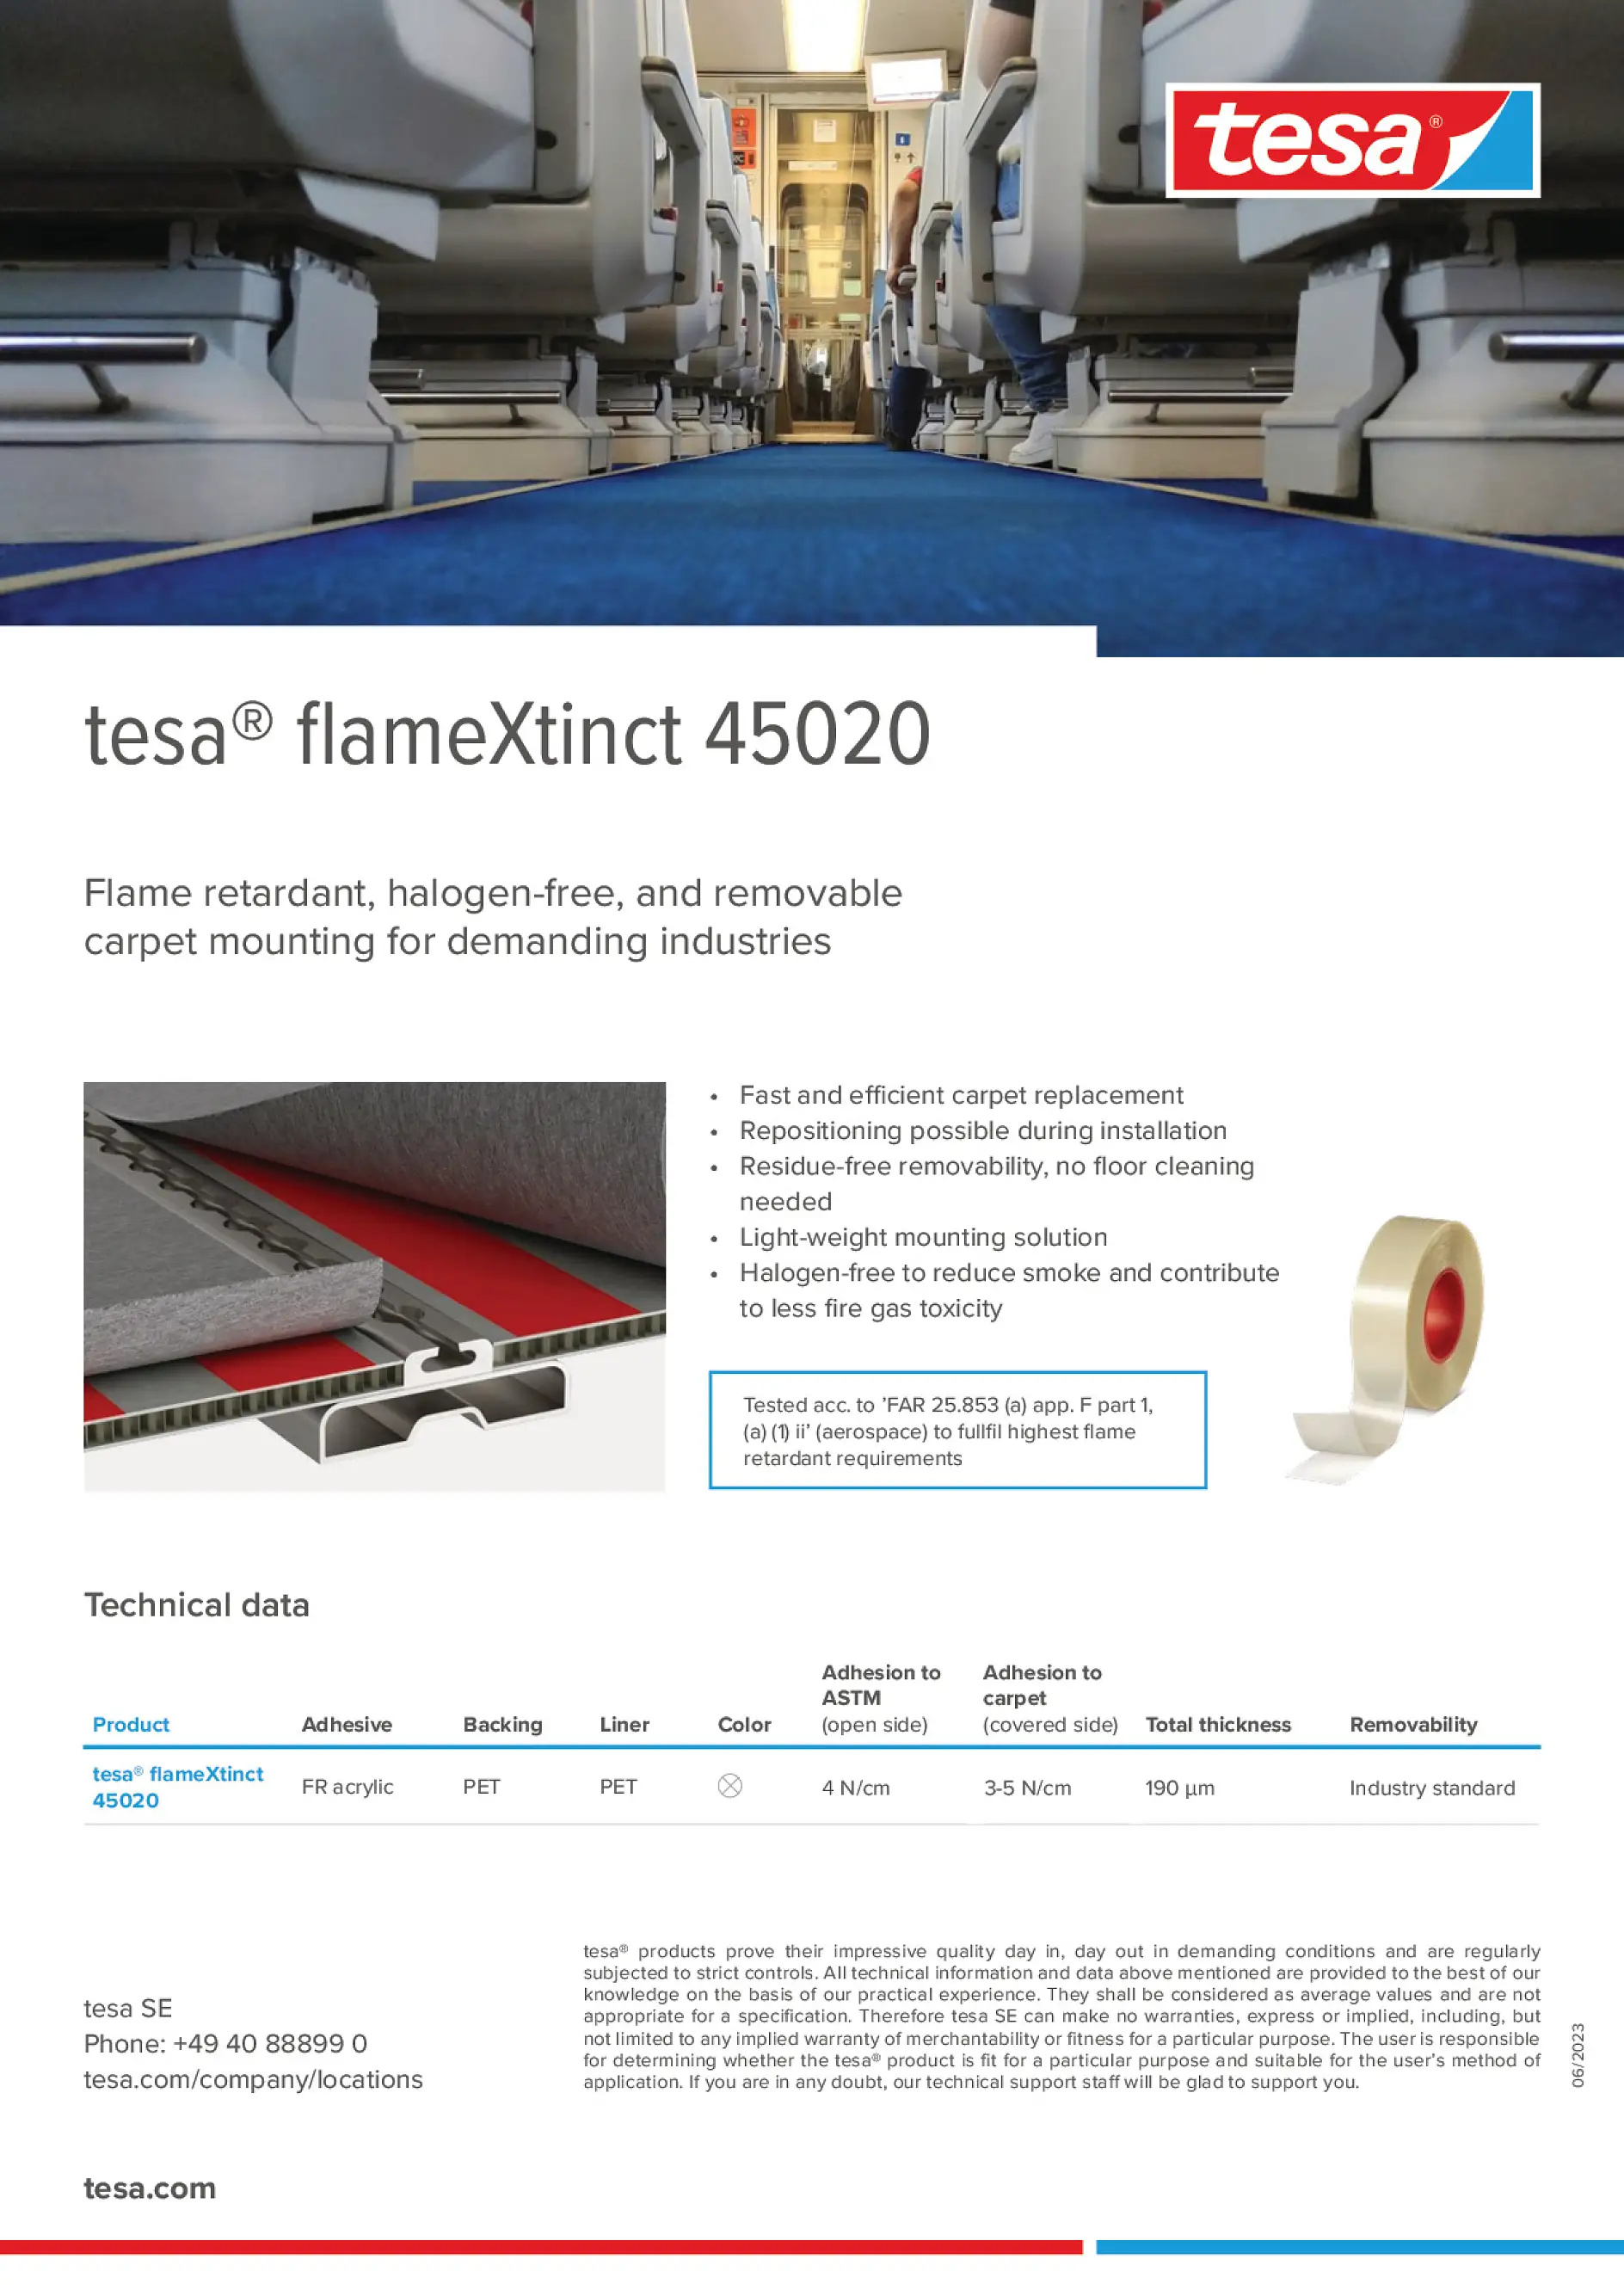 tesa® flameXtinct 45020 carpet mounting flyer